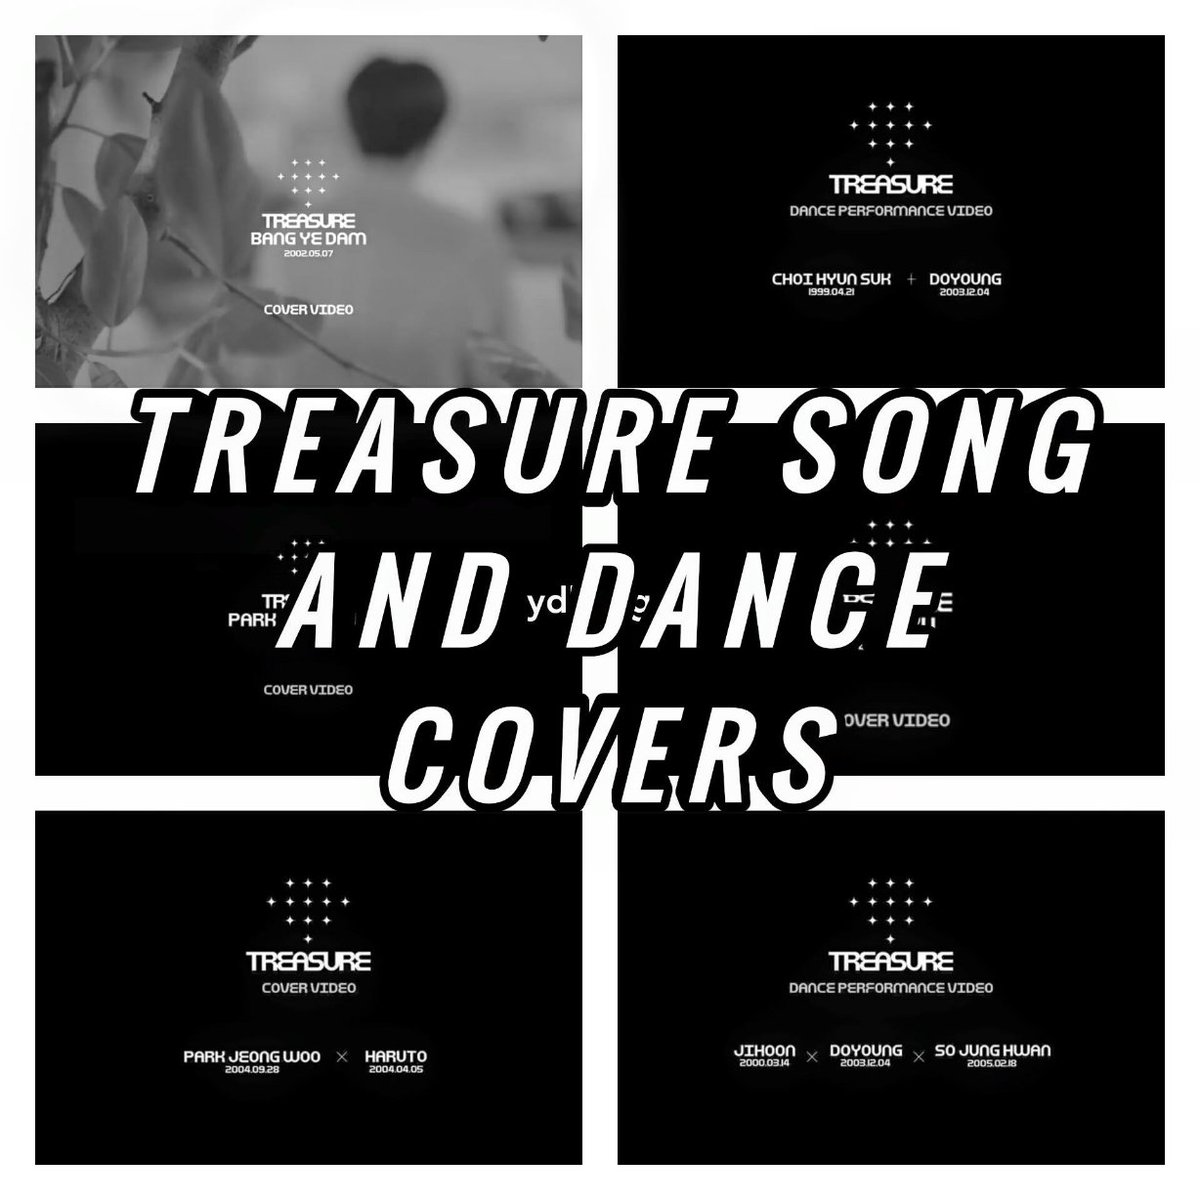 TREASURE FLEXING HOW TALENTED THEY ARE BY COVERING SONGS AND DANCE.Honesty- YedamBabbushka Boi- Hyunsuk X DoyoungSuperstar- JeongwooLatch- JunkyuStack It Up- Haruto X JeongwooGod's Plan- Jihoon X Doyoung X JungwhanYoshi,Mashiho, Asahi, and Jaehyuk's covers coming soon ~